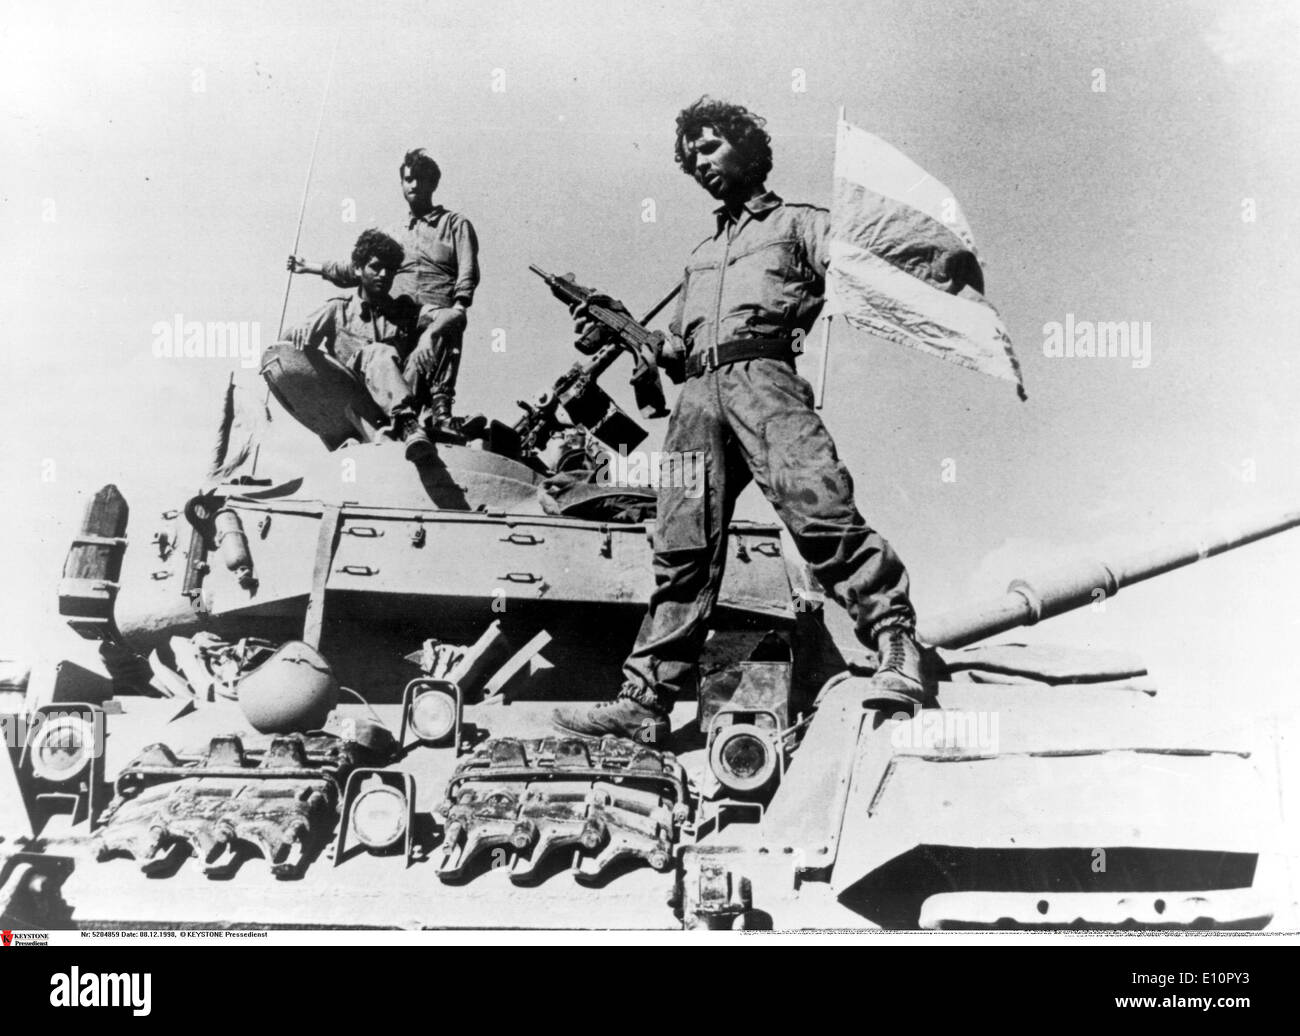 Yom kippur war hi res stock photography and images   Alamy